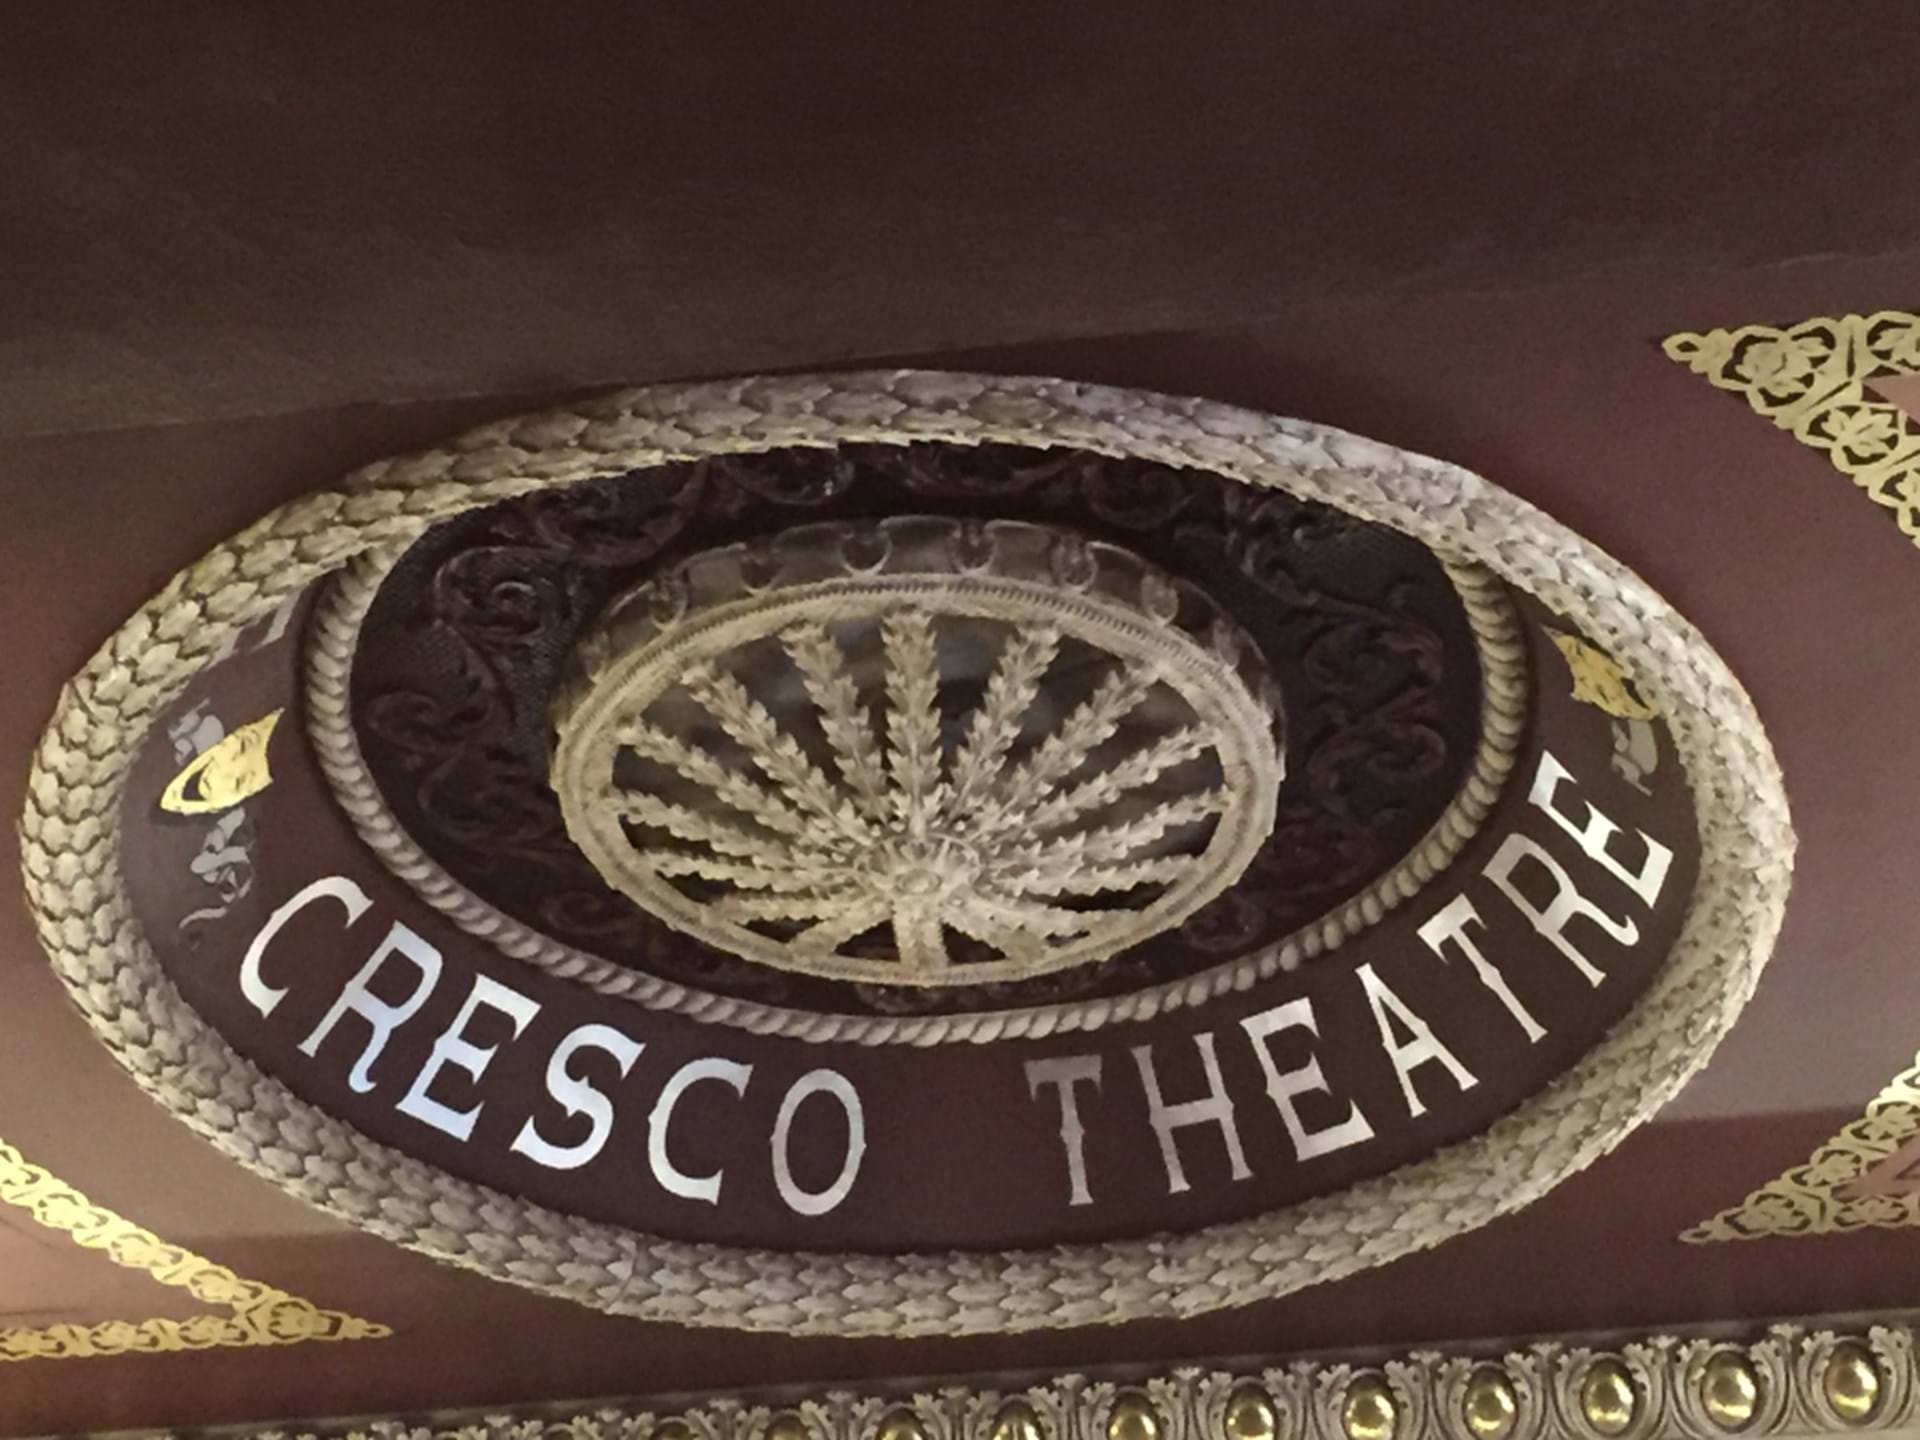 Gold leafing adorns this historic Theatre